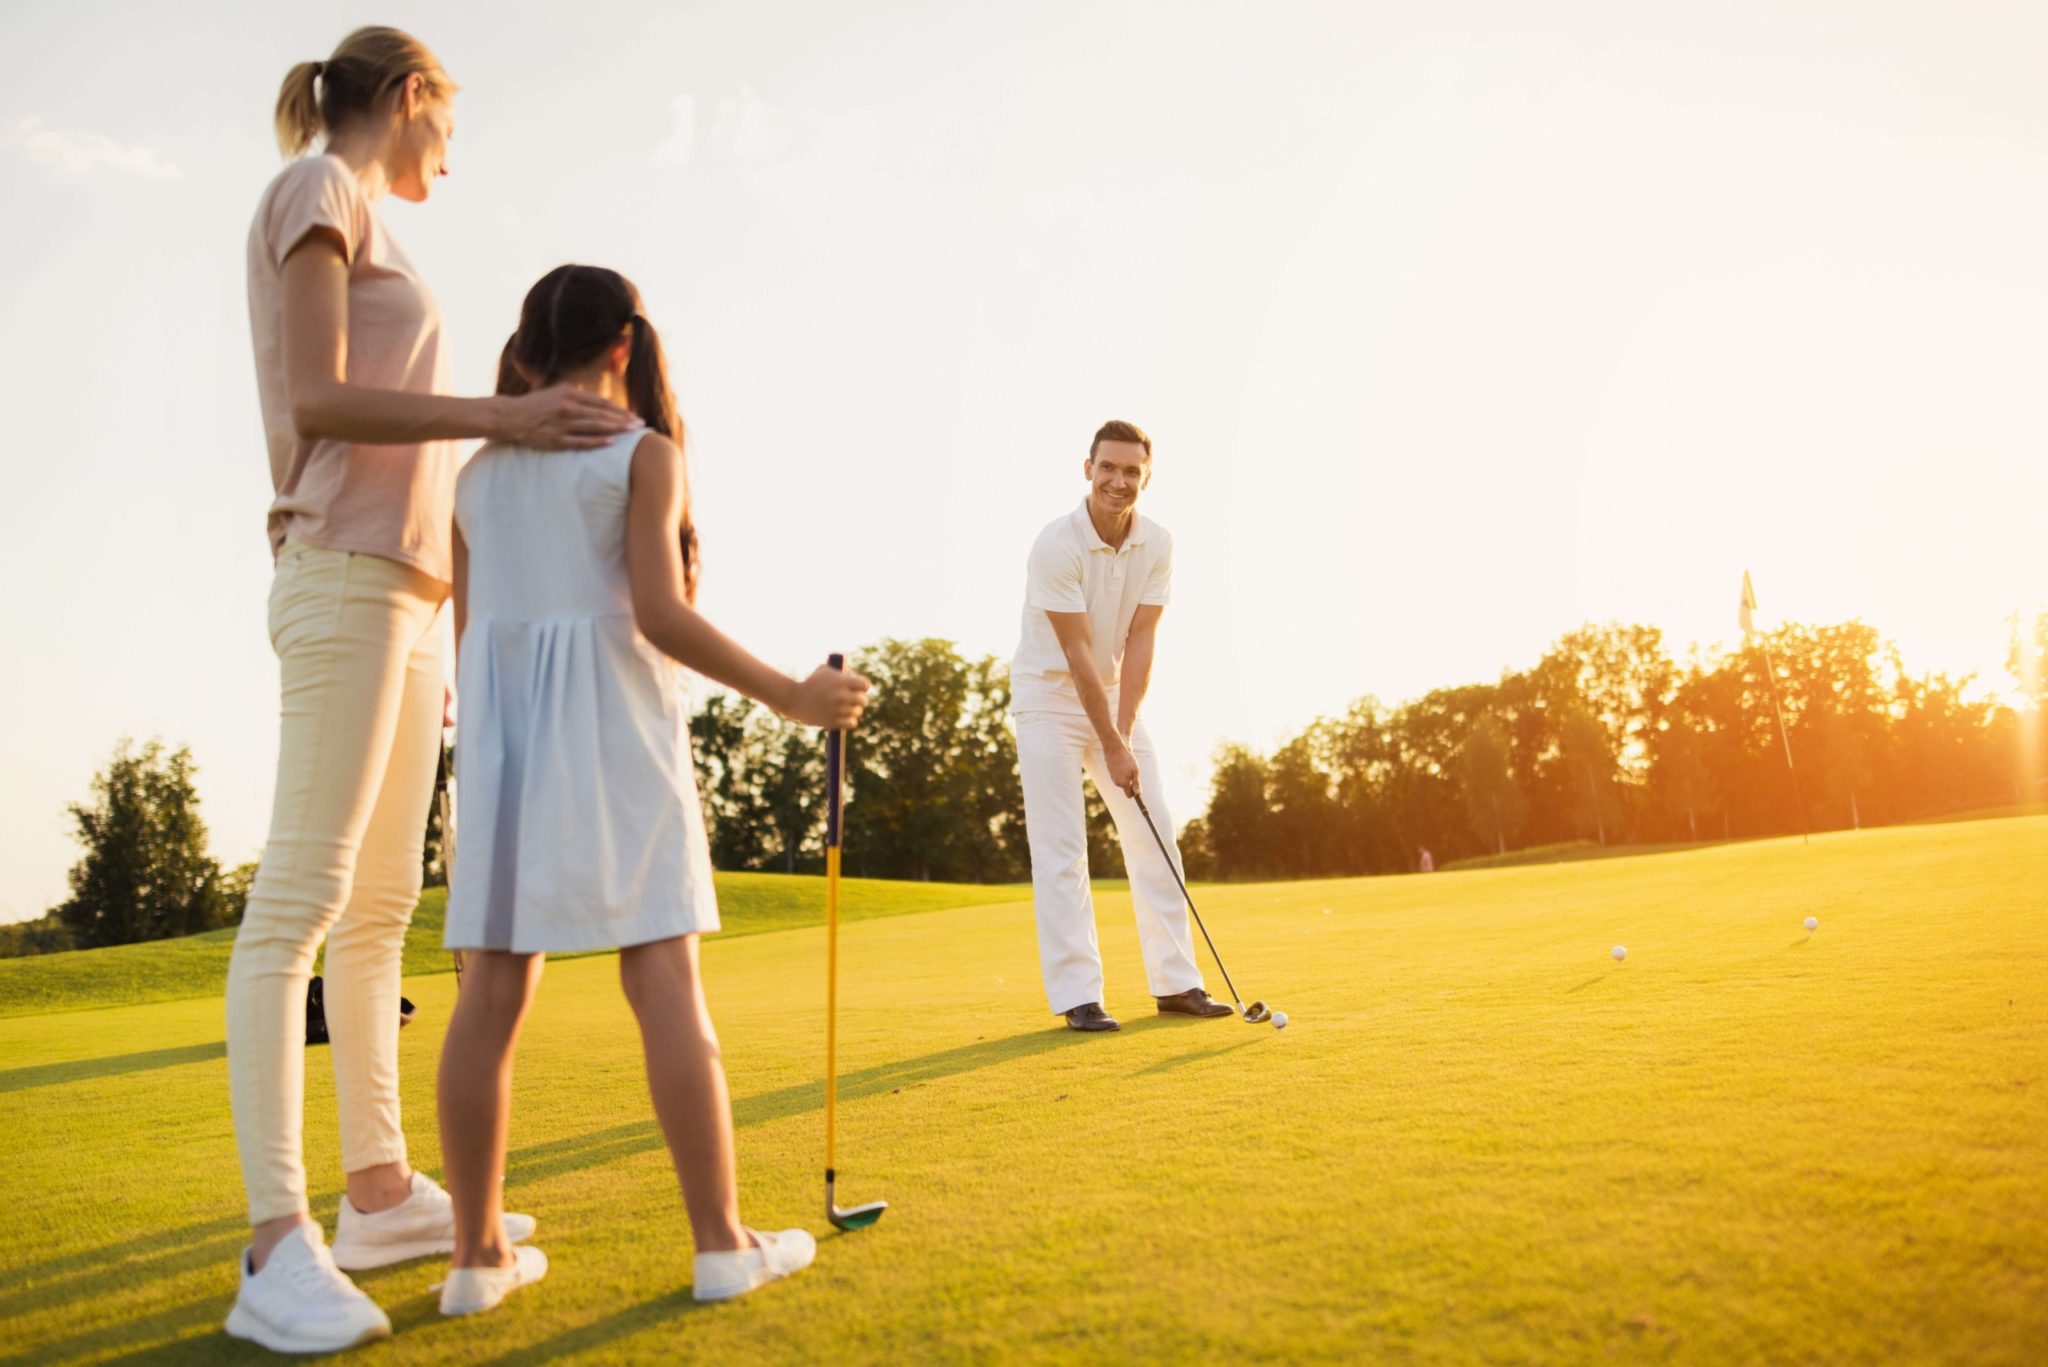 A family of three playing Port Aransas Golf.